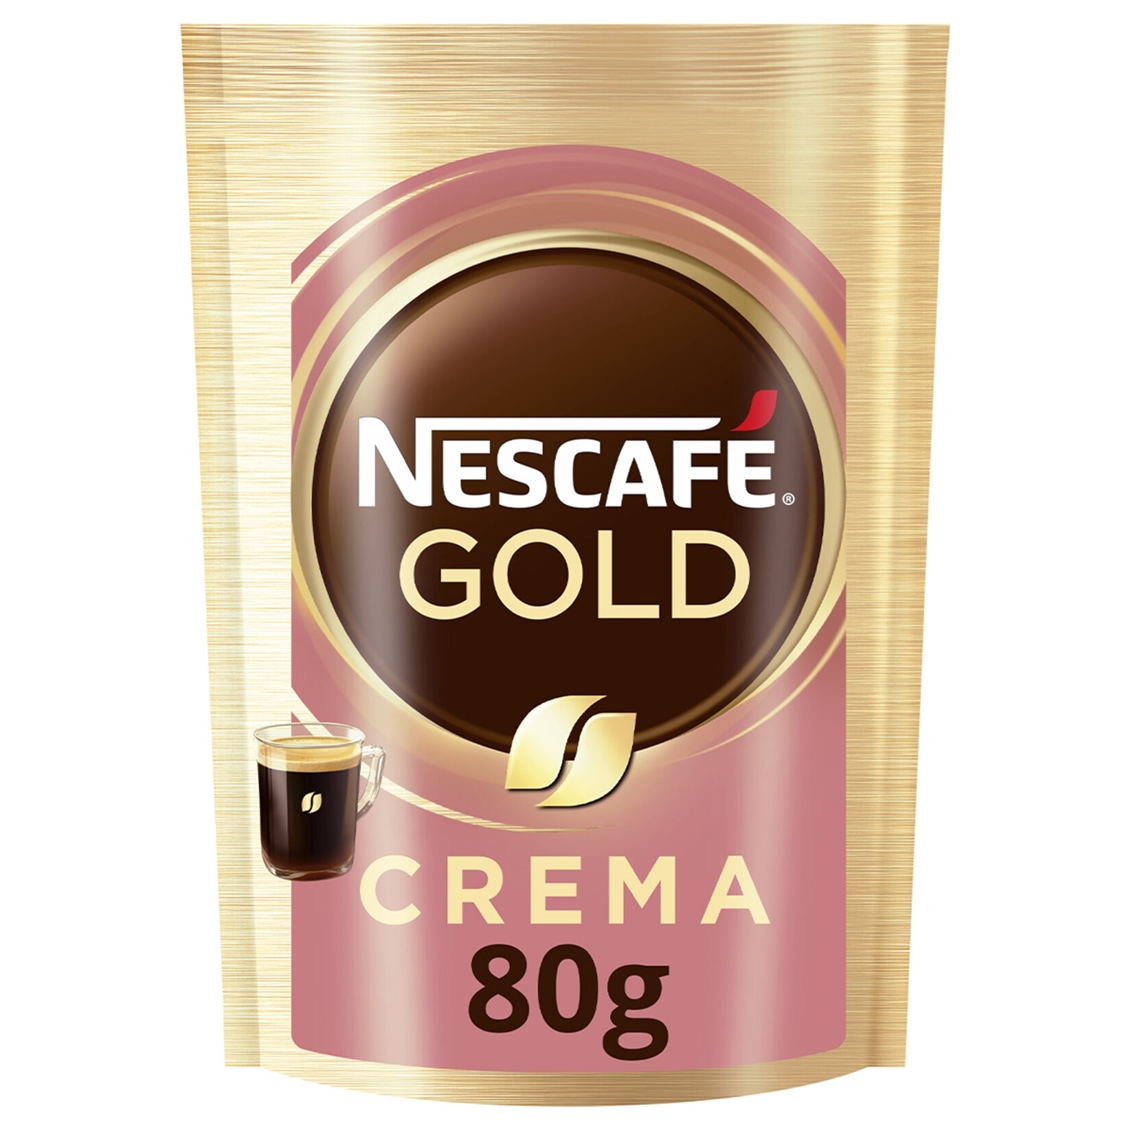 Nescafe Gold Crema Kahve 80 Gr - Onur Market